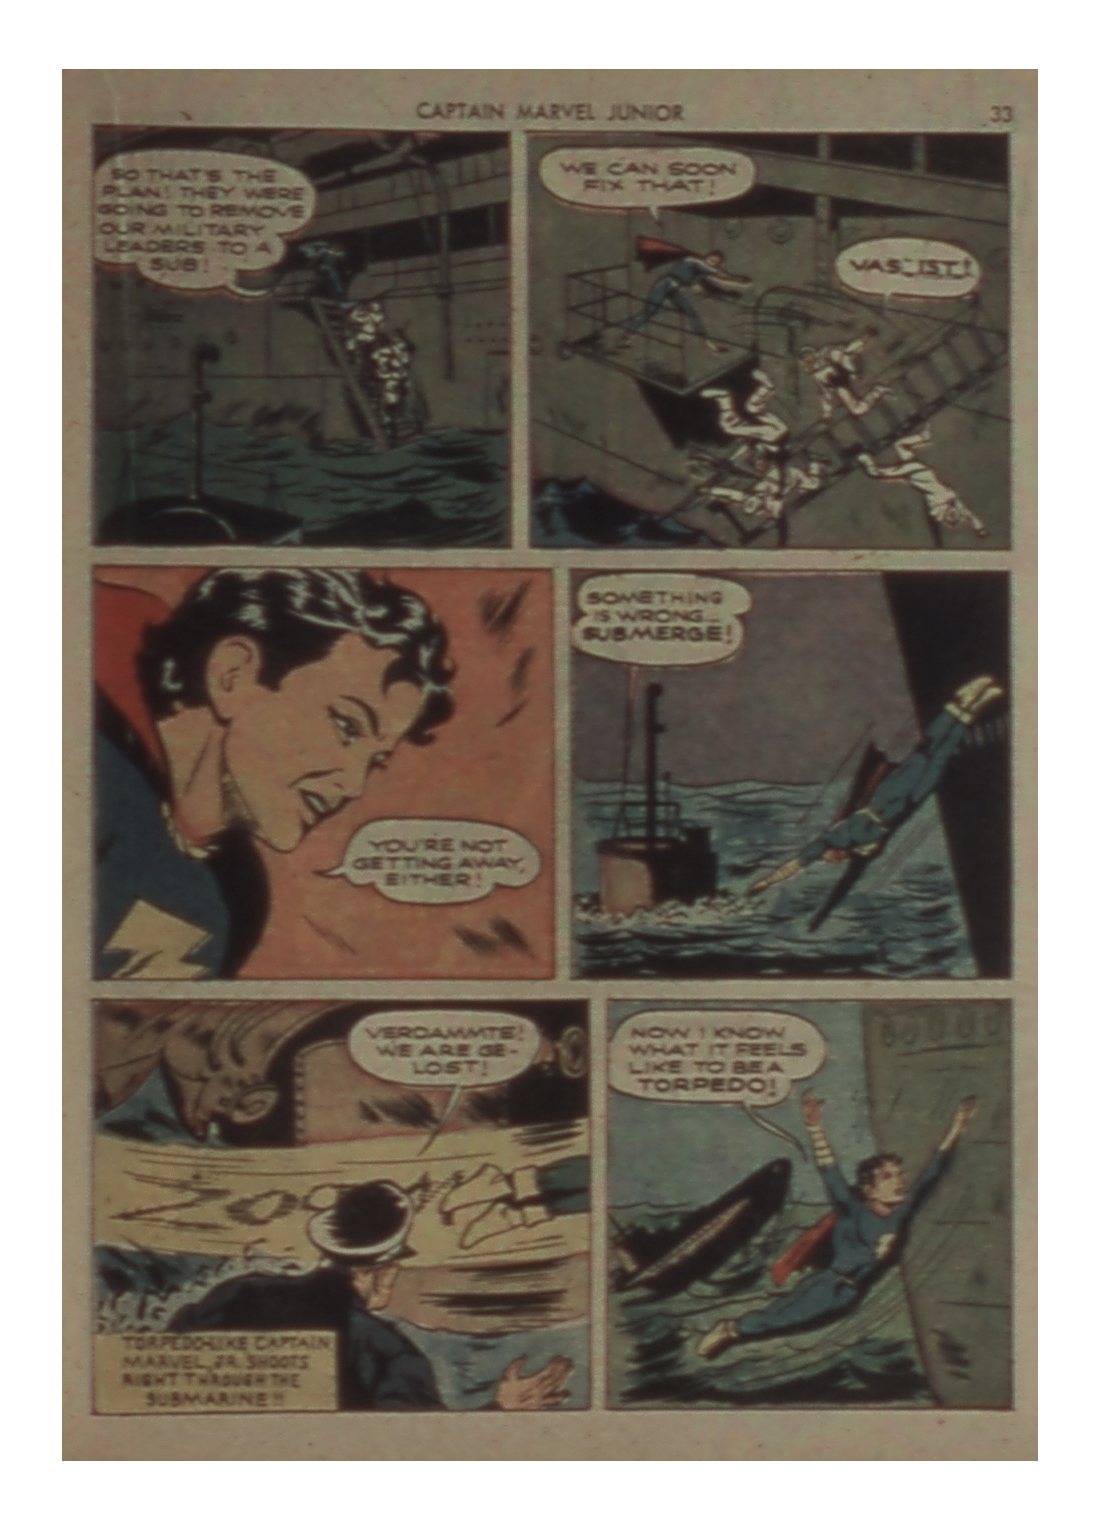 Read online Captain Marvel, Jr. comic -  Issue #4 - 34